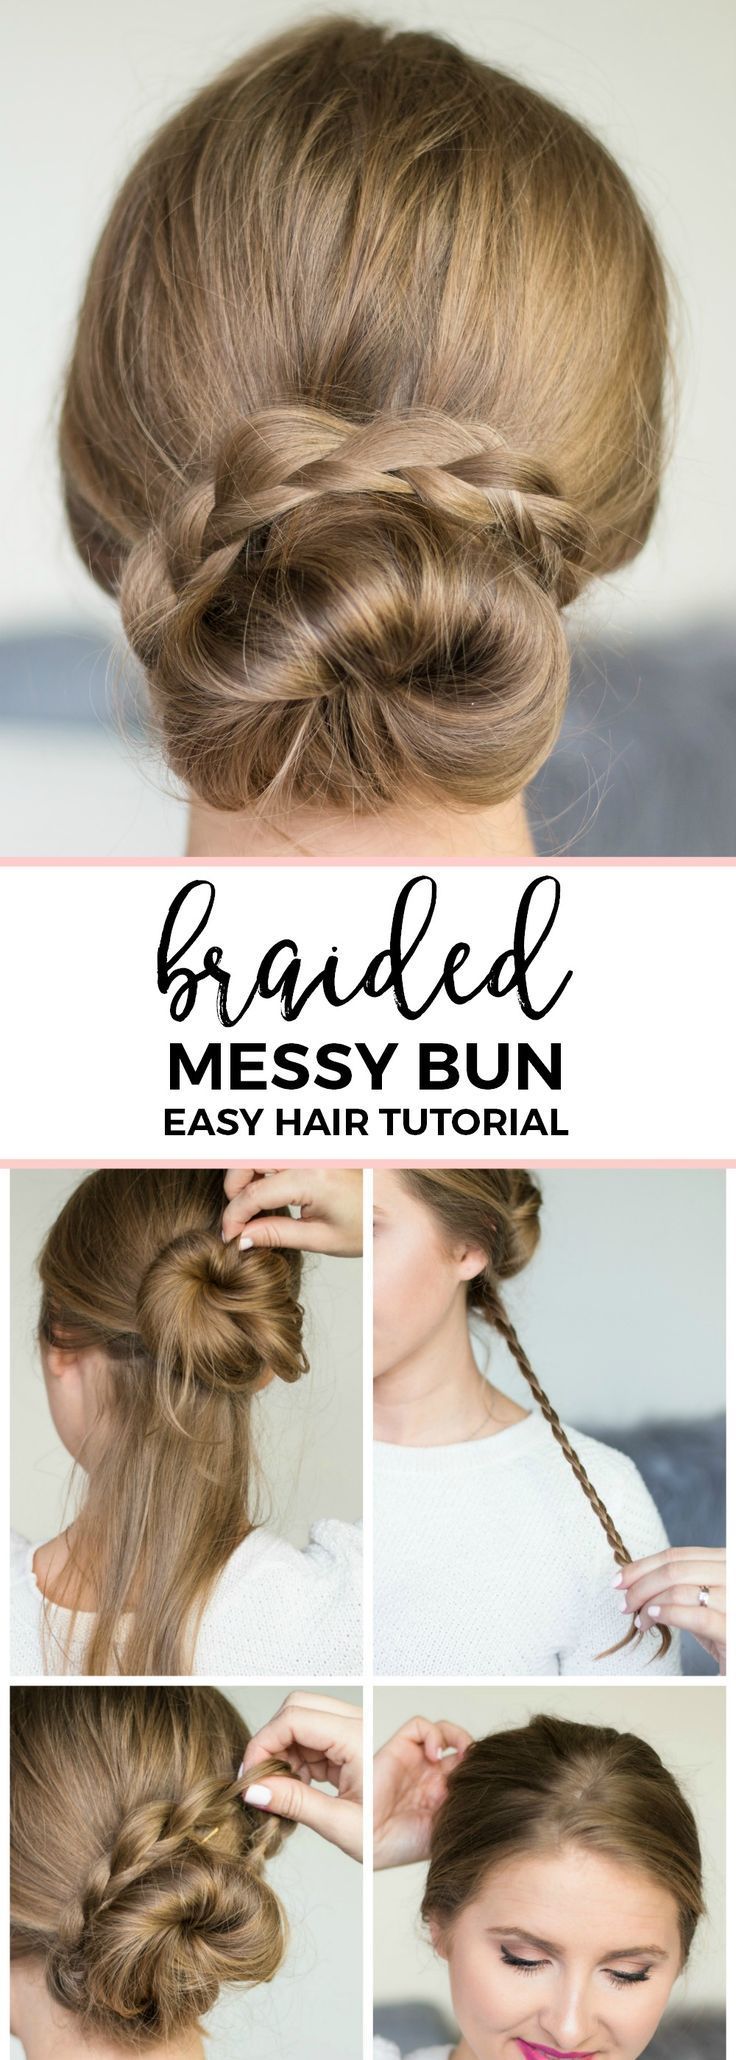 easy hair braid tutorial